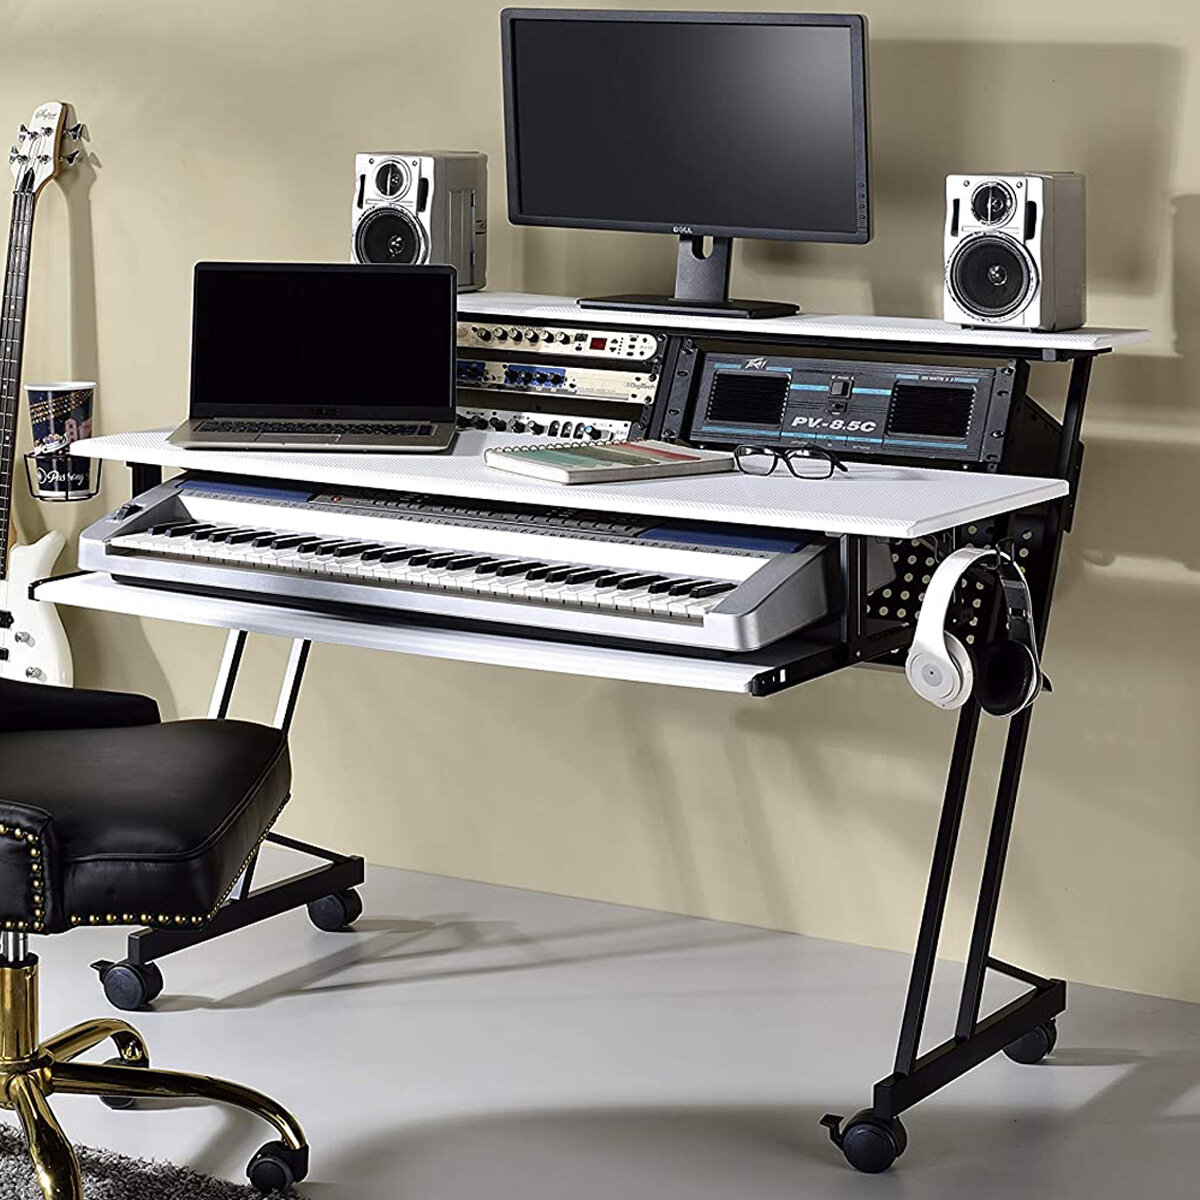 Inbox zero exiquio music studio producer recording piano stand desk unique smart design workstation table carbon fiber texture reviews